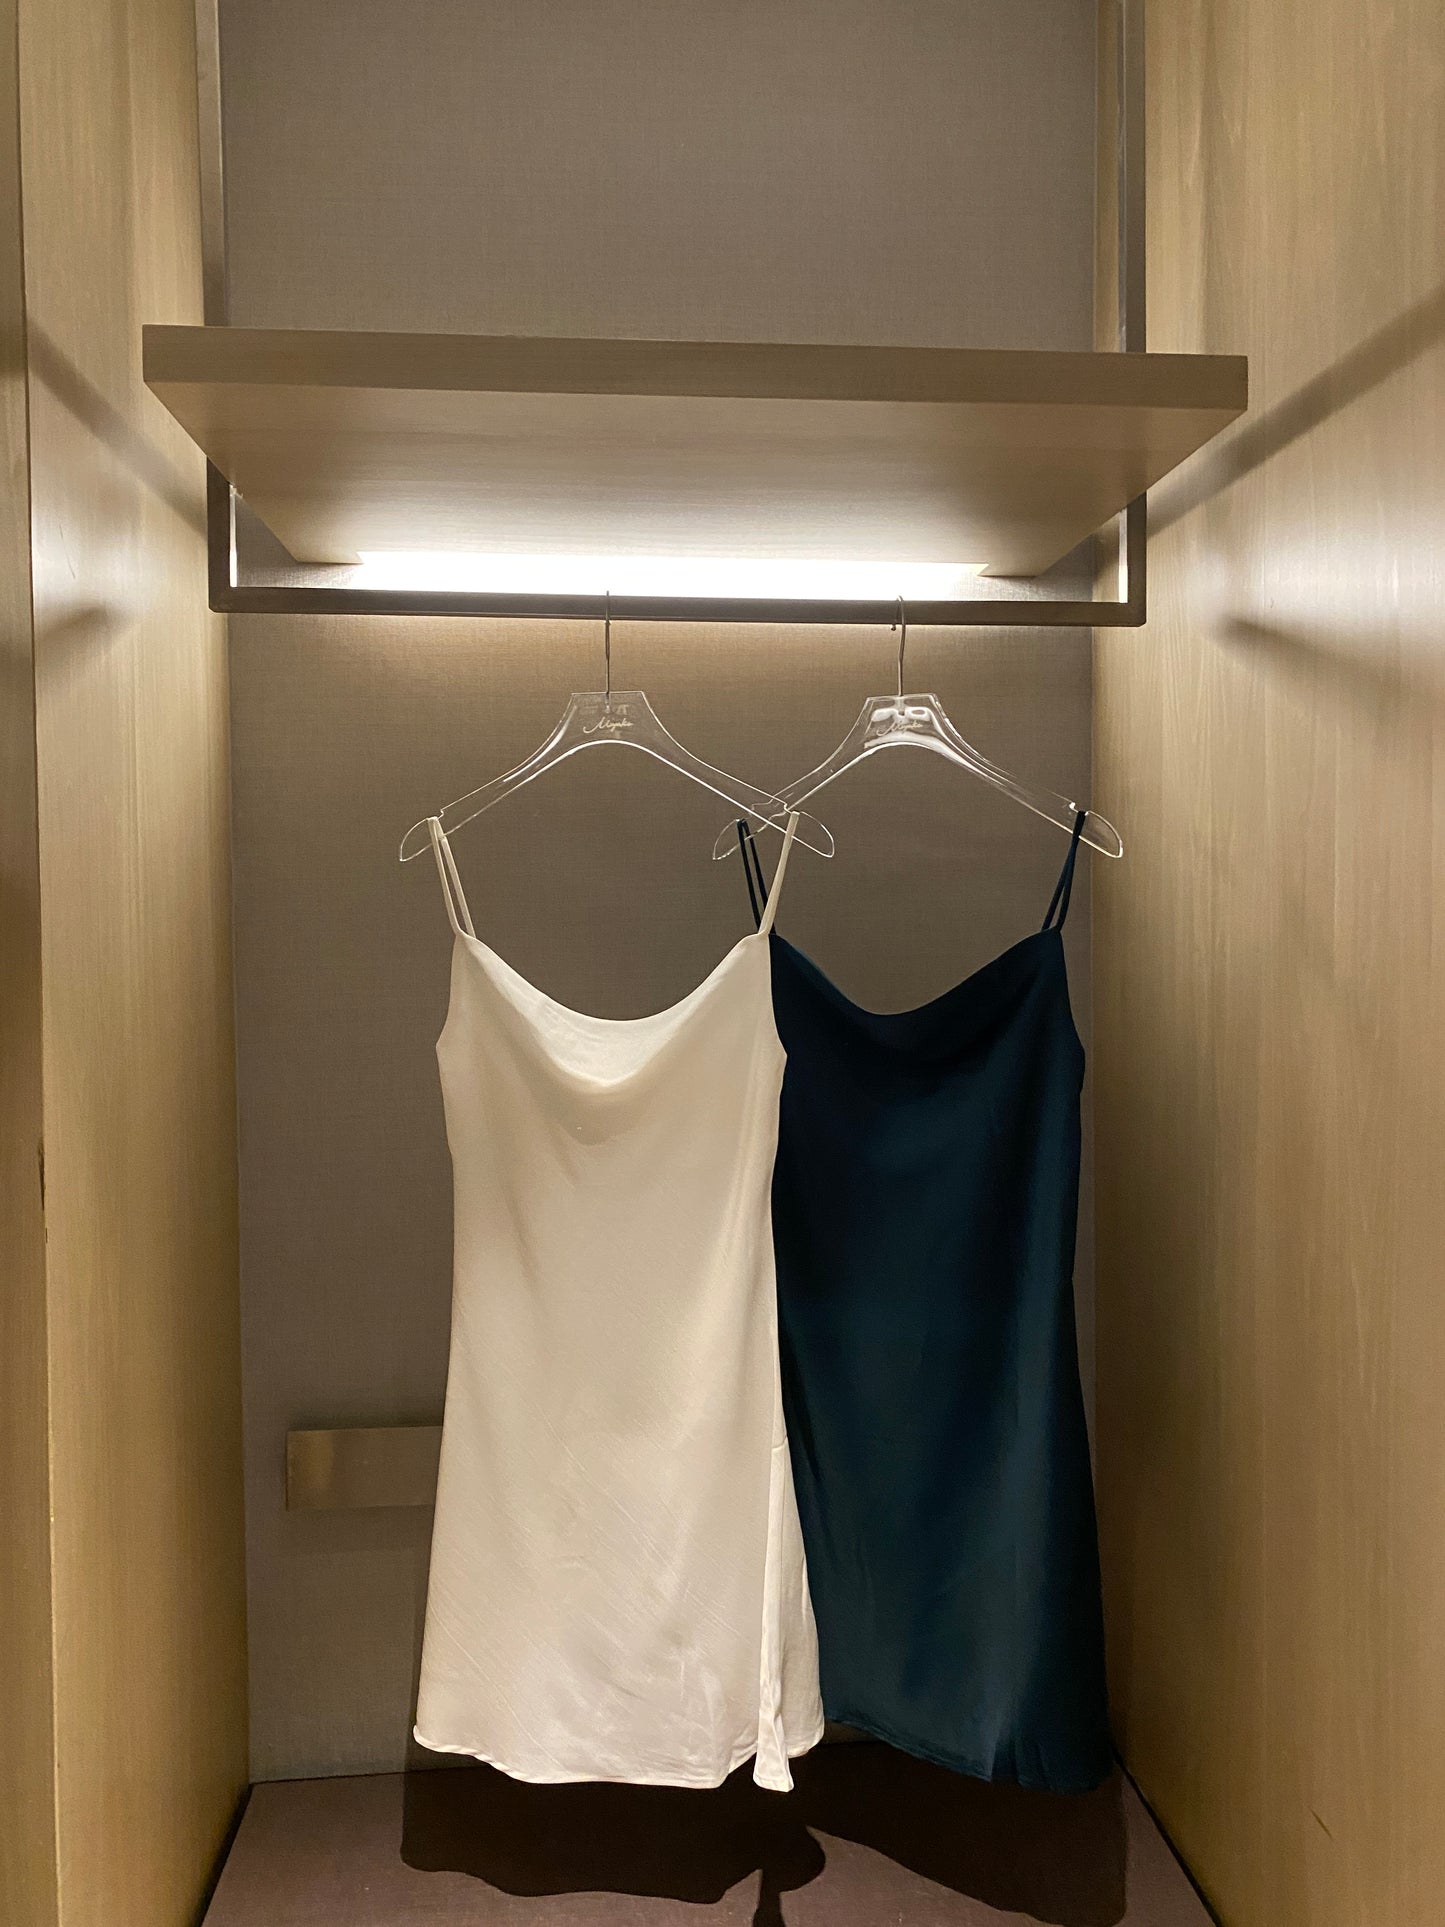 Julien Satin Dress in White